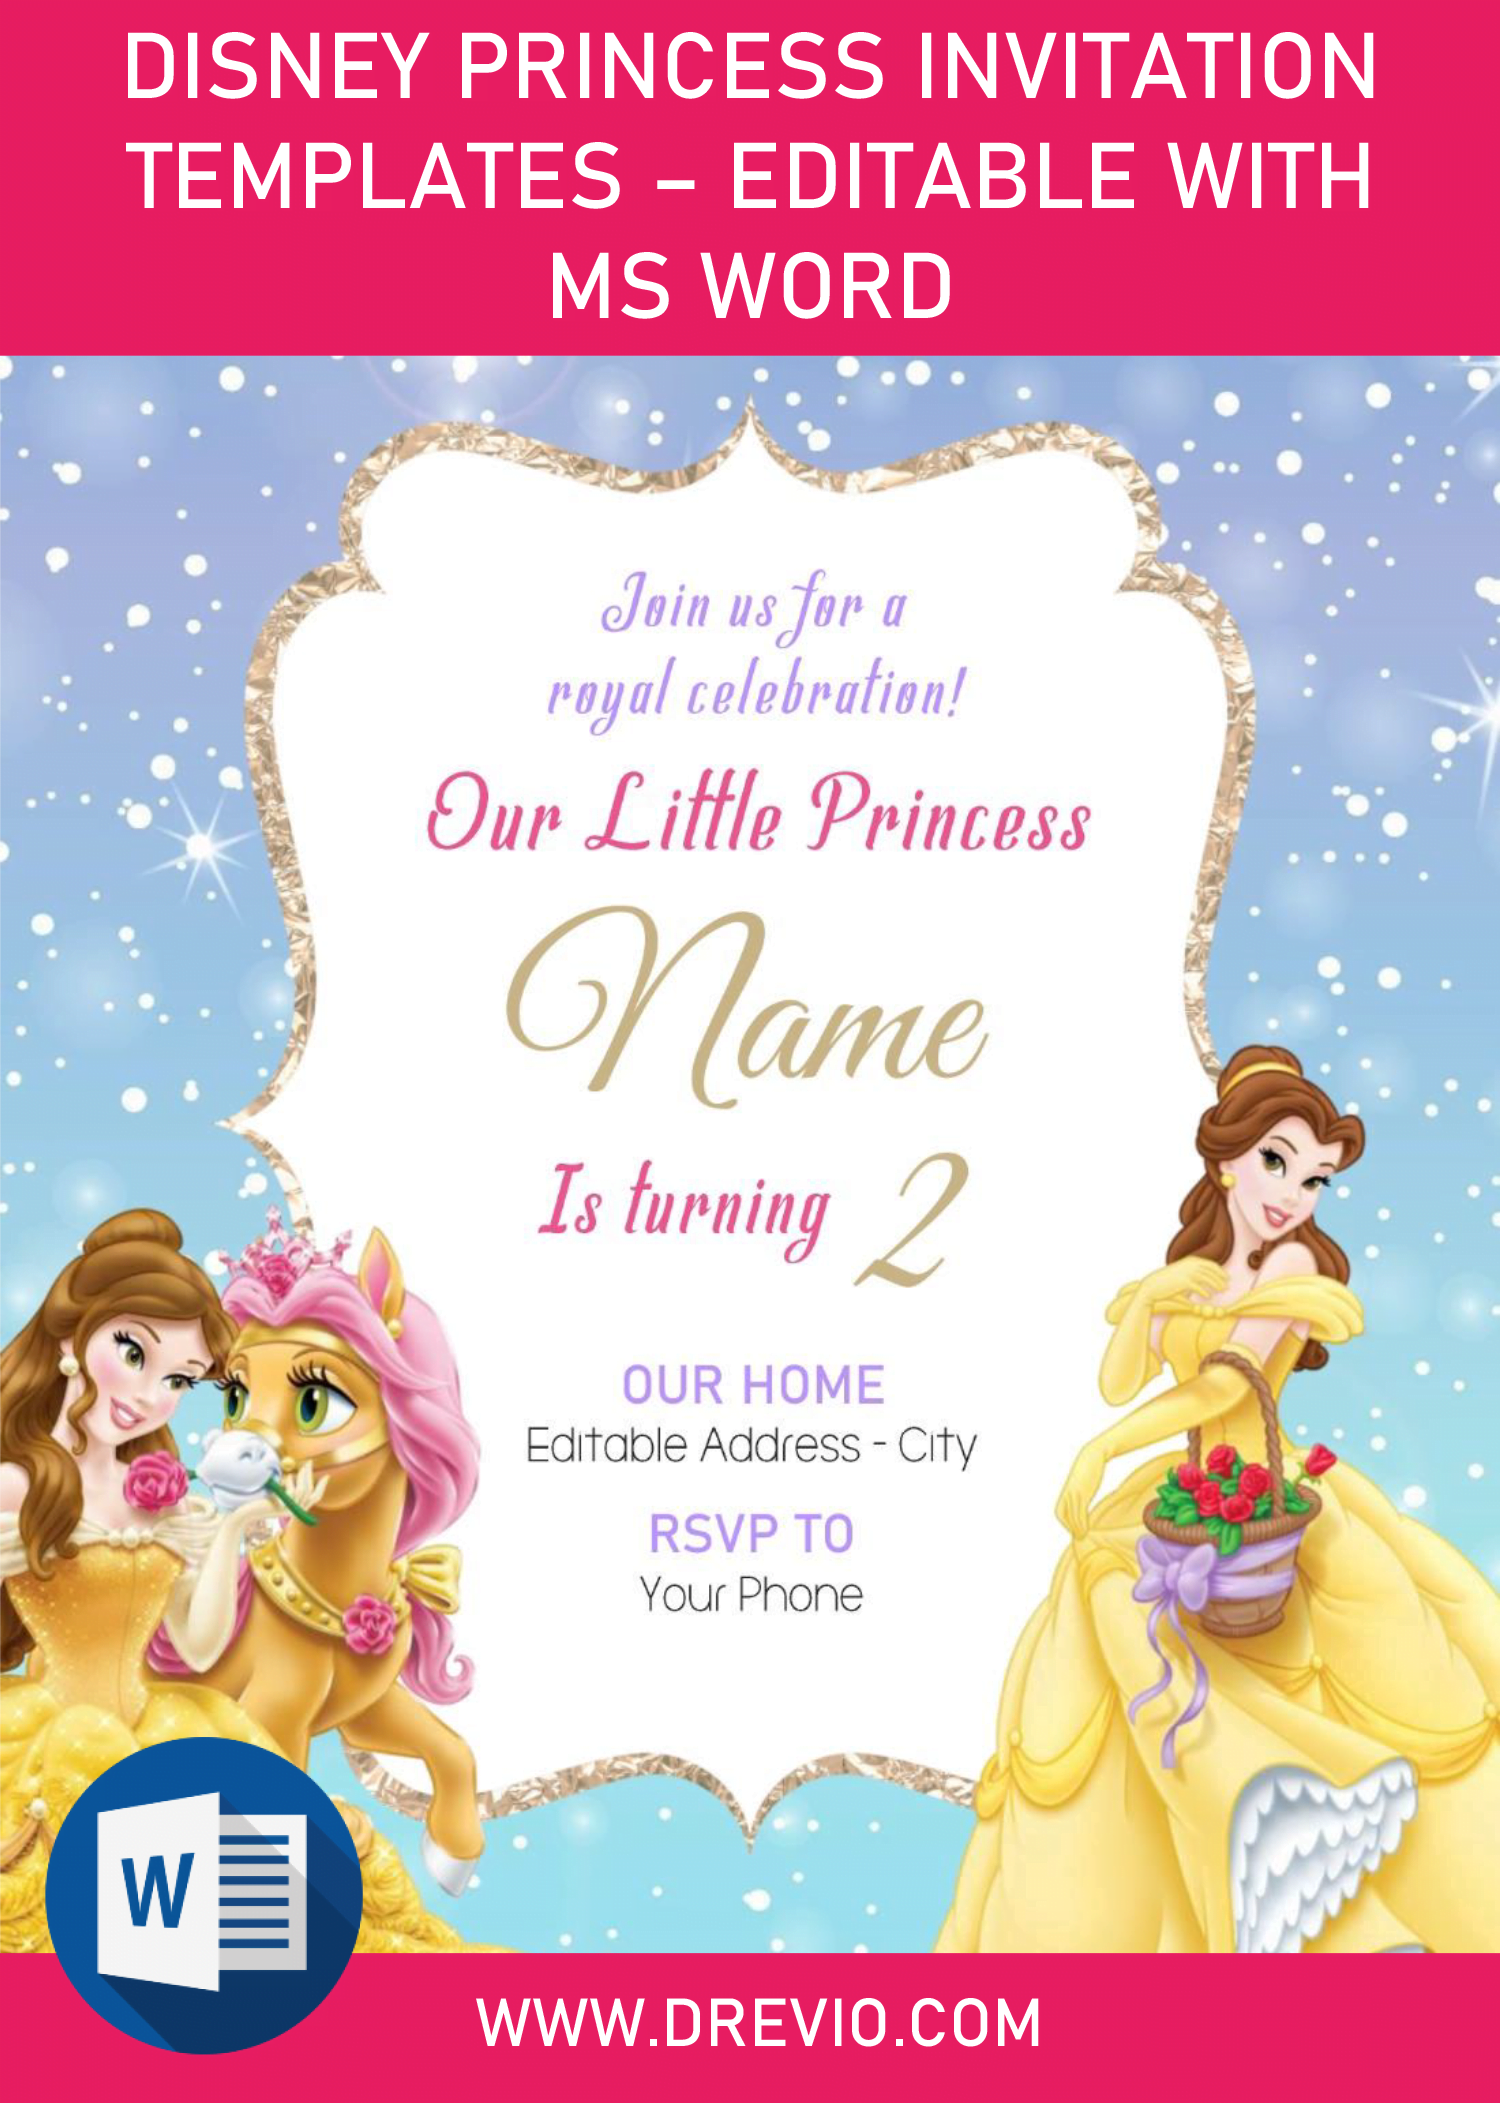 disney-princess-invitation-templates-editable-with-ms-word-download-hundreds-free-printable